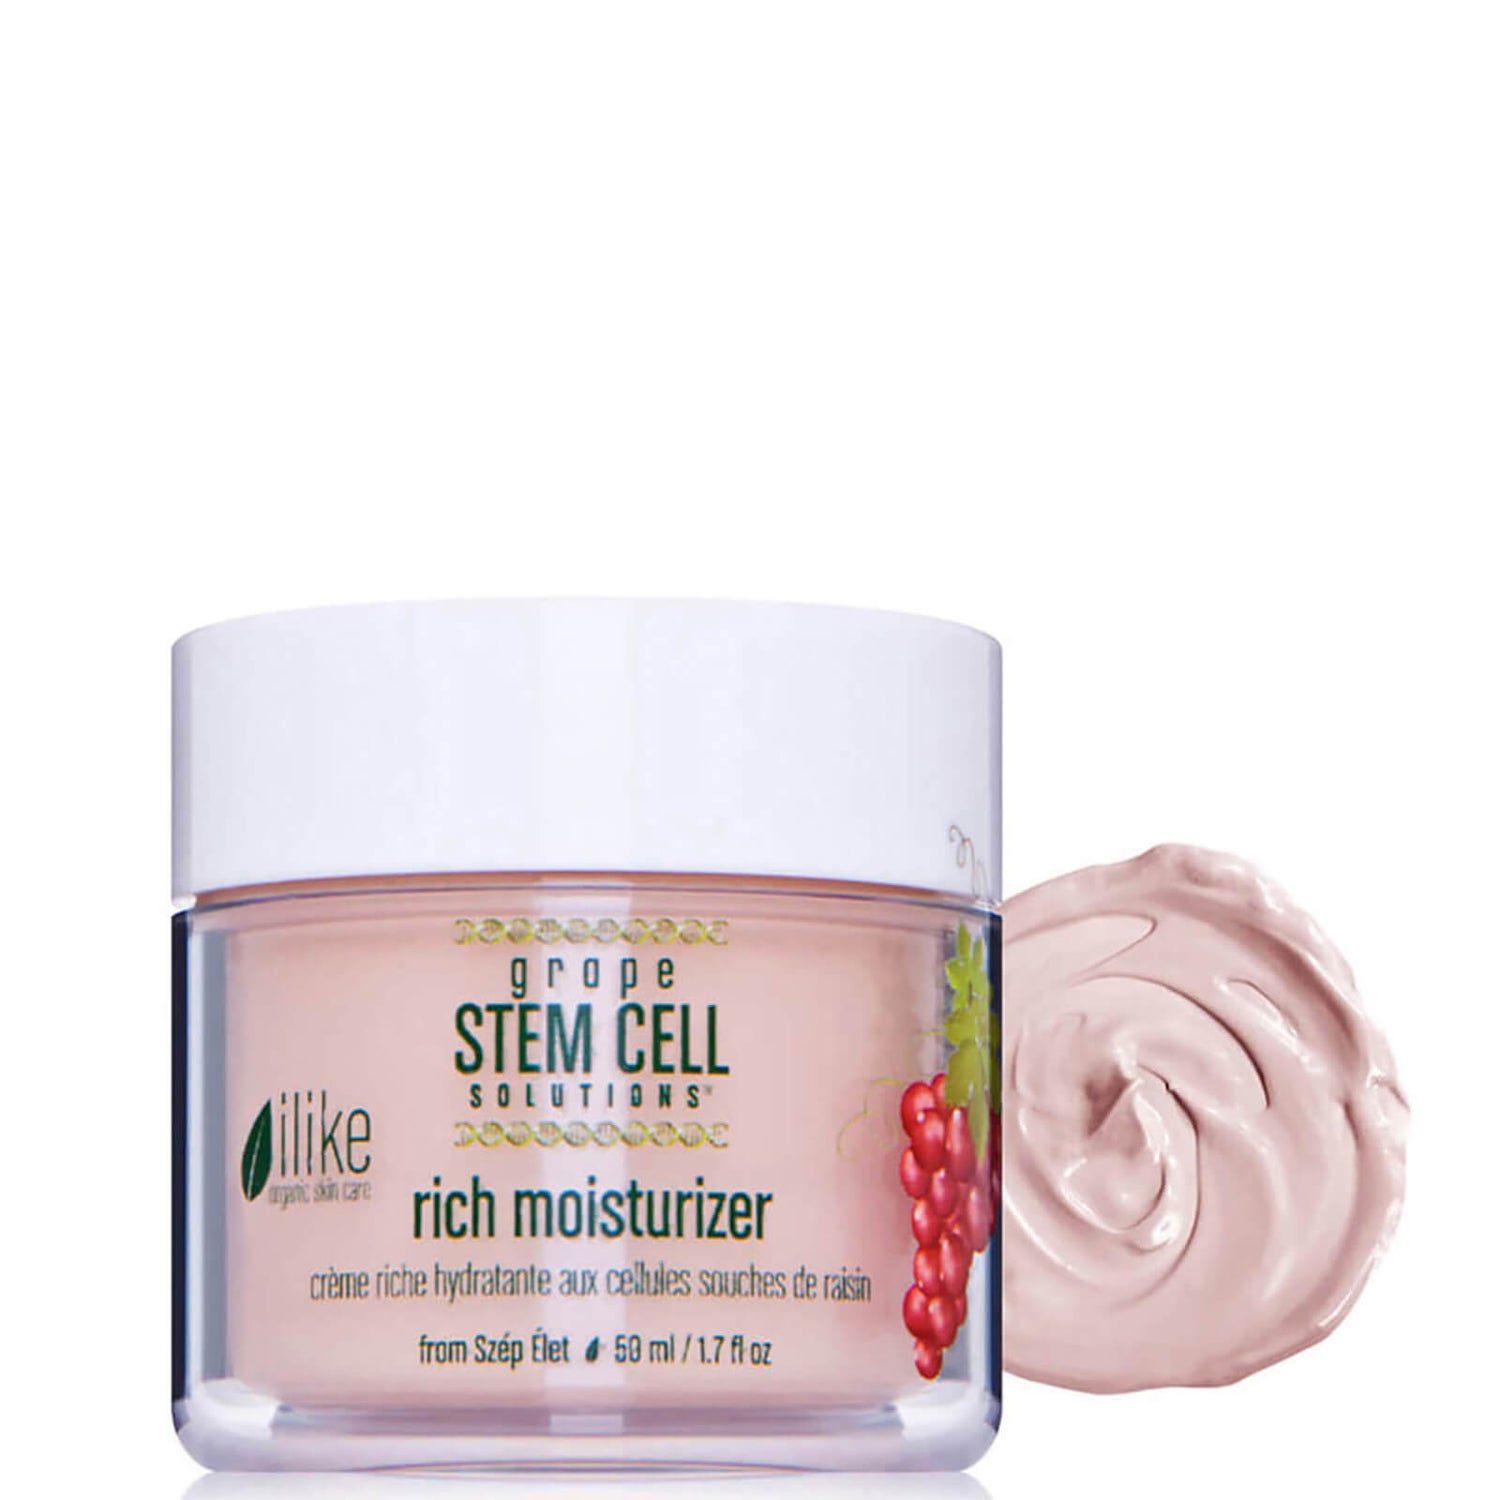 ilike organic skin care Grape Stem Cell Solutions Rich Moisturizer (1.7 fl. oz.)